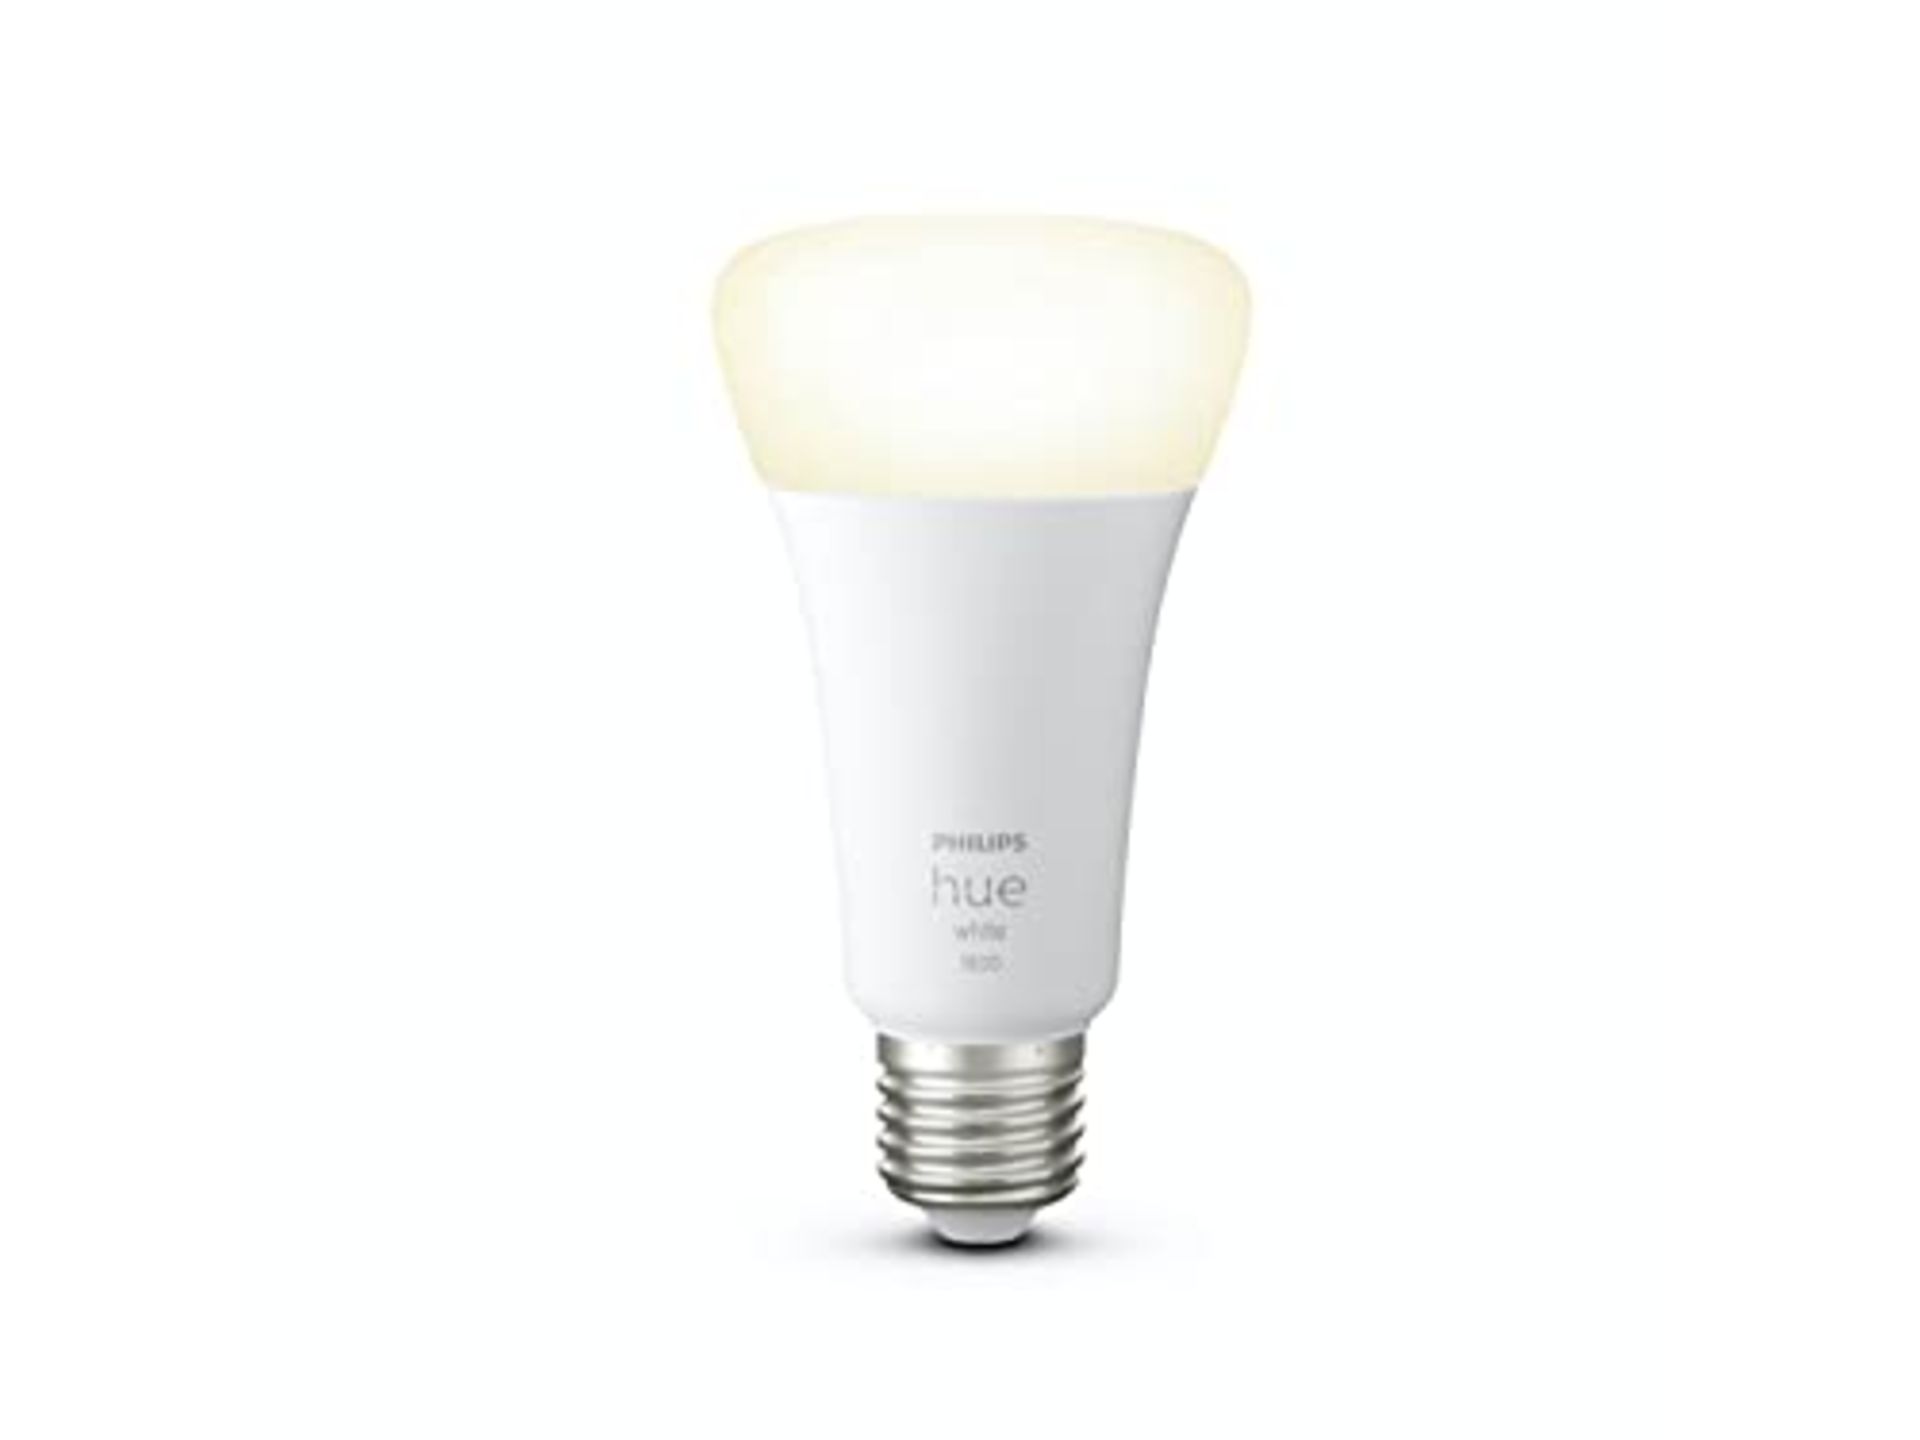 Philips Hue NEW White Smart Light Bulb 100W - 1600 Lumen [E27 Edison Screw] With Bluet